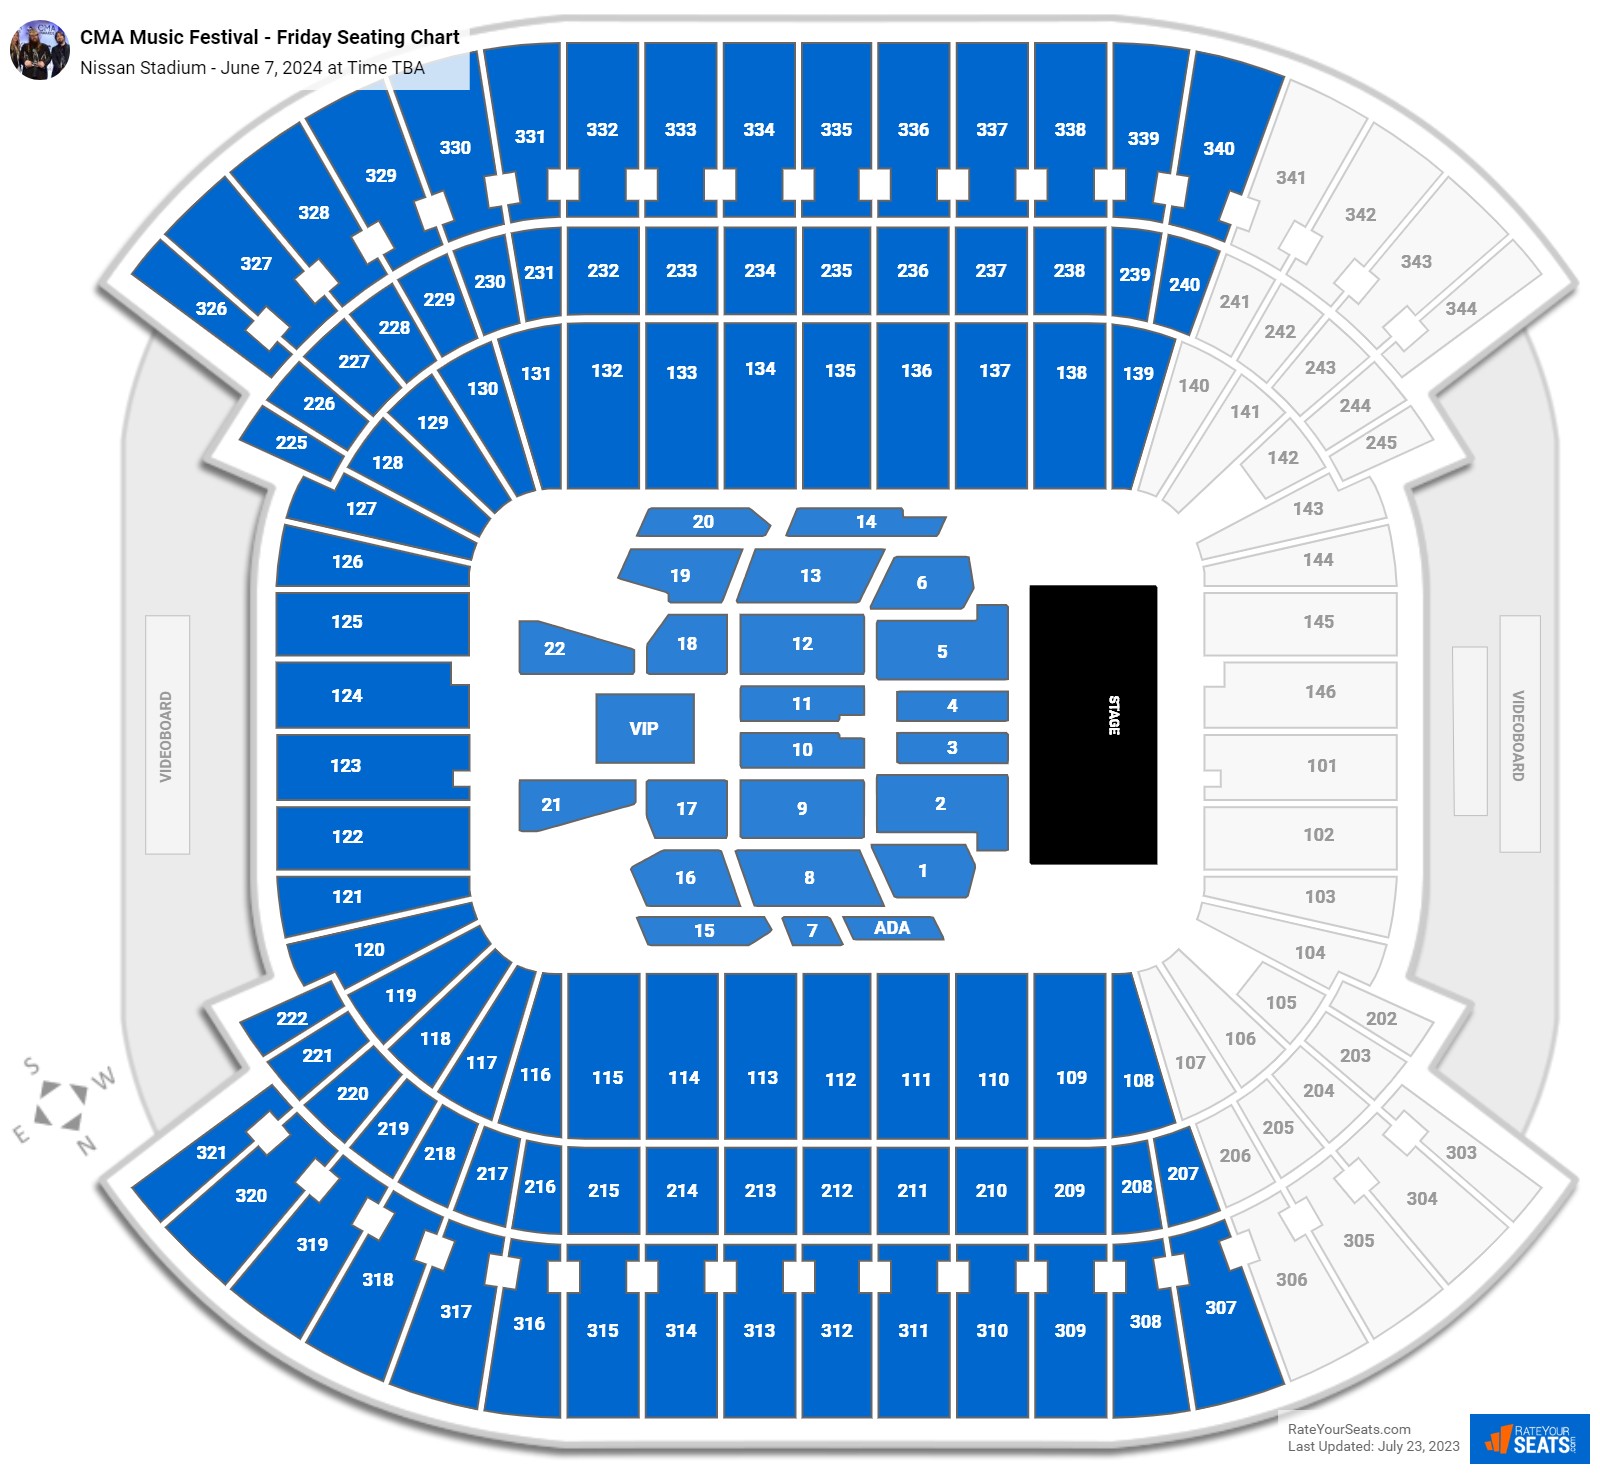 Nissan Stadium Concert Seating Chart